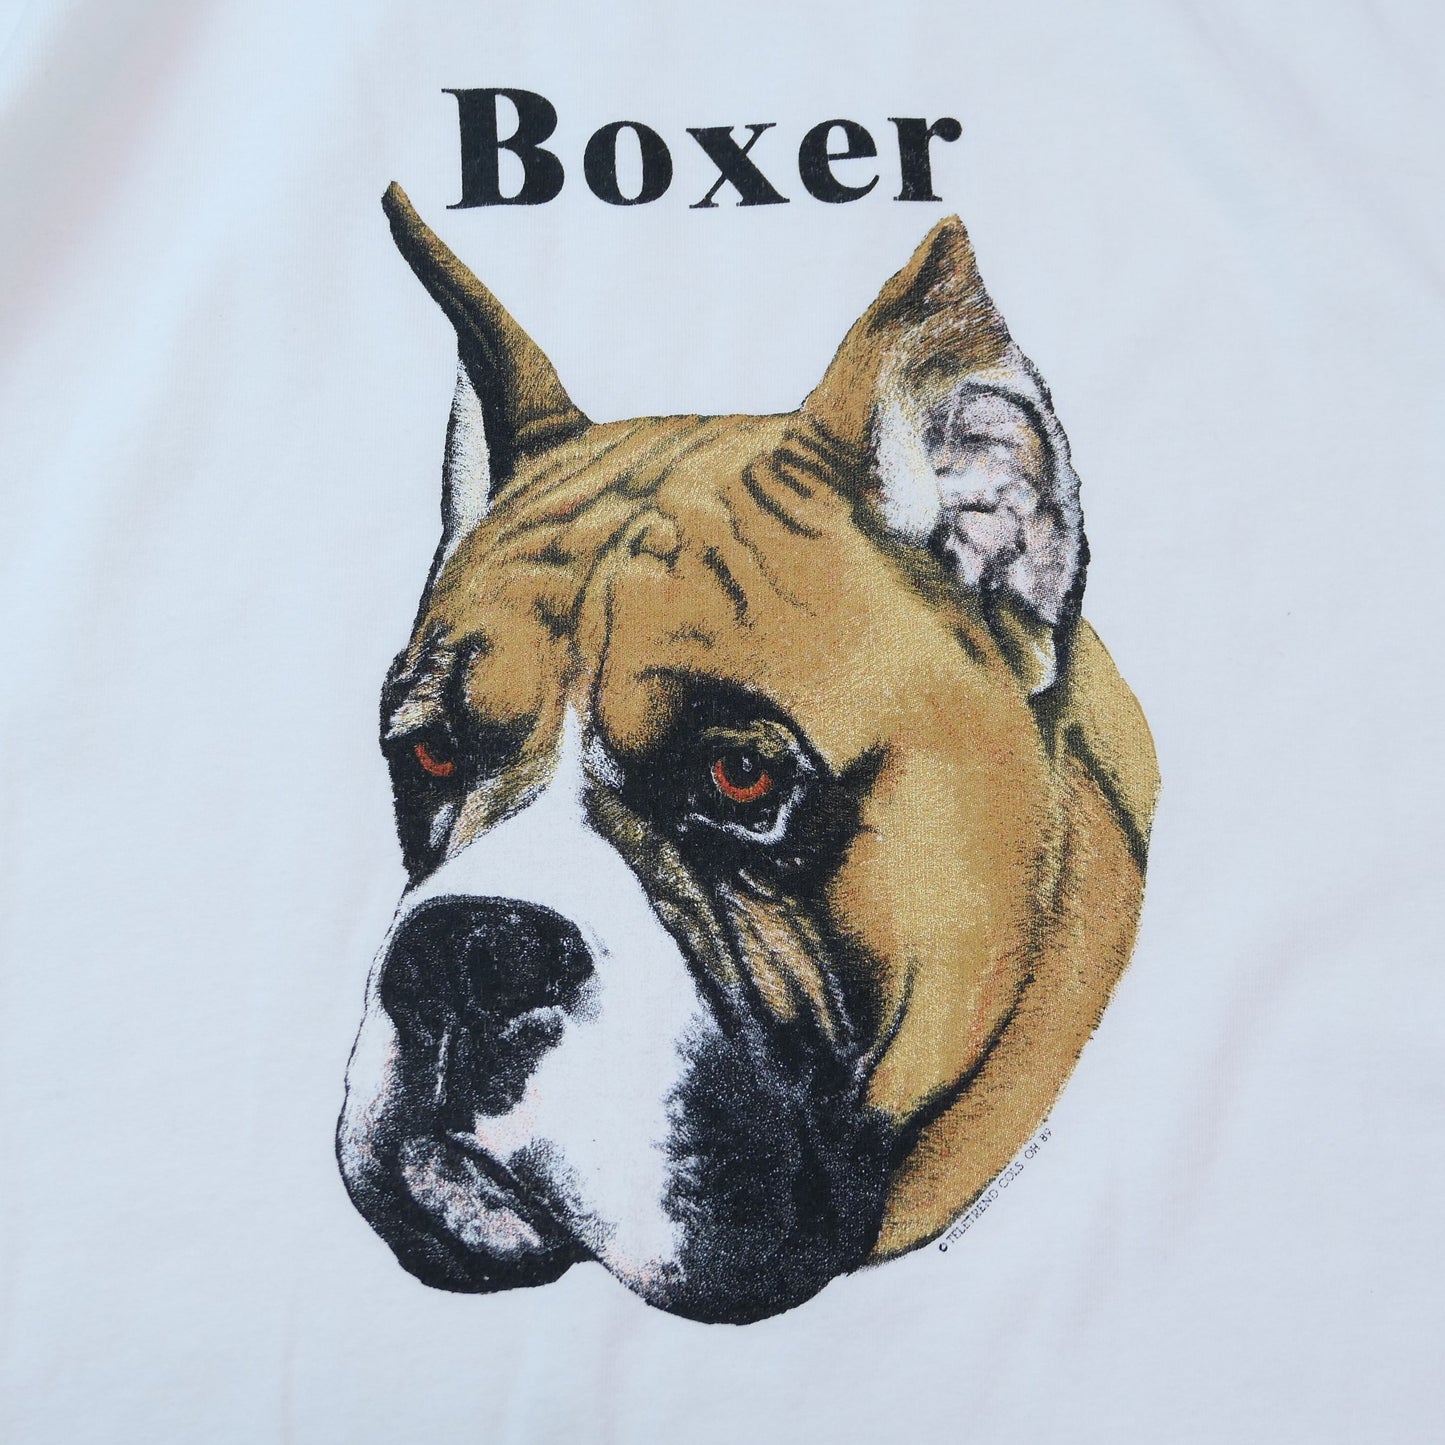 VINTAGE 90s XL Dog Face Tee "Boxer" -TELETREND COLS-